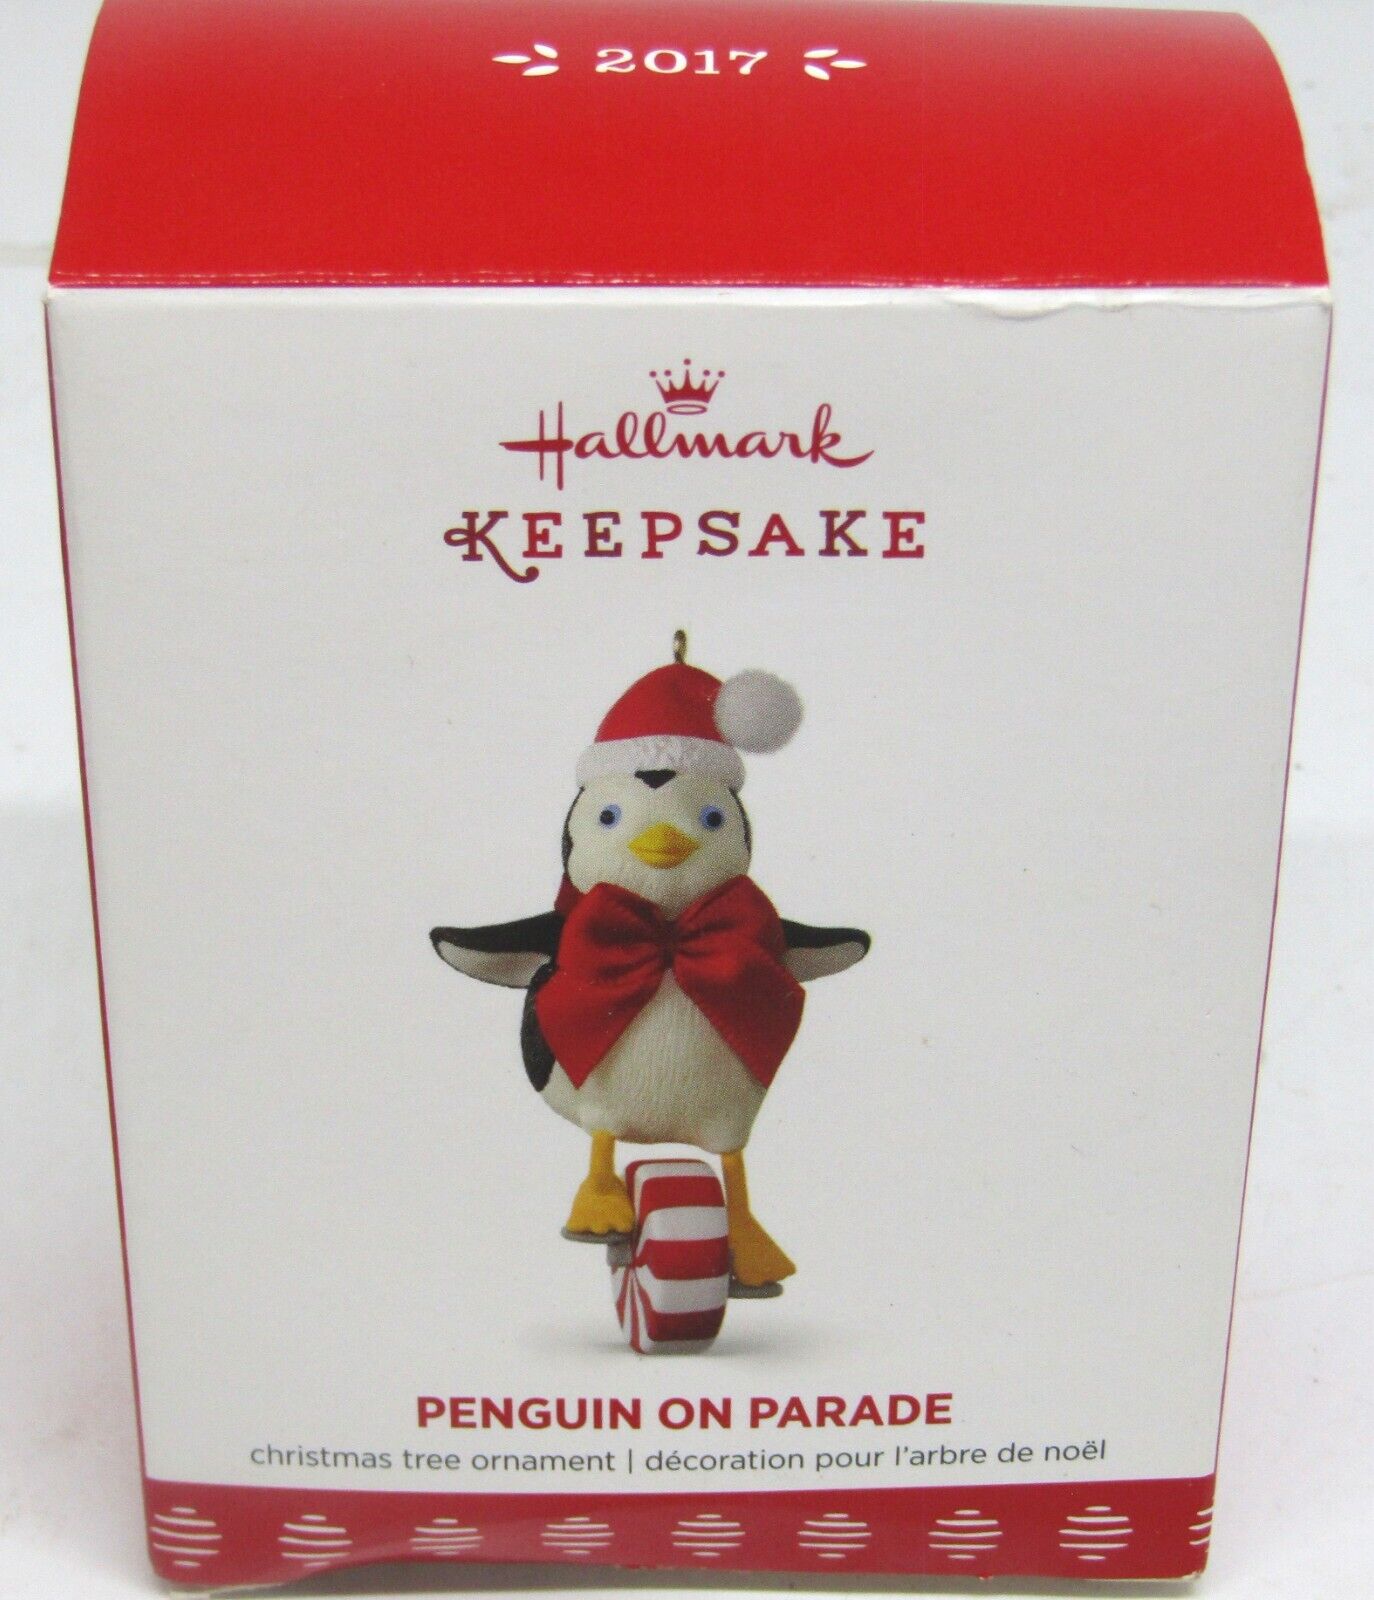 2017 Hallmark Keepsake, Penguin on Parade, Ornament.